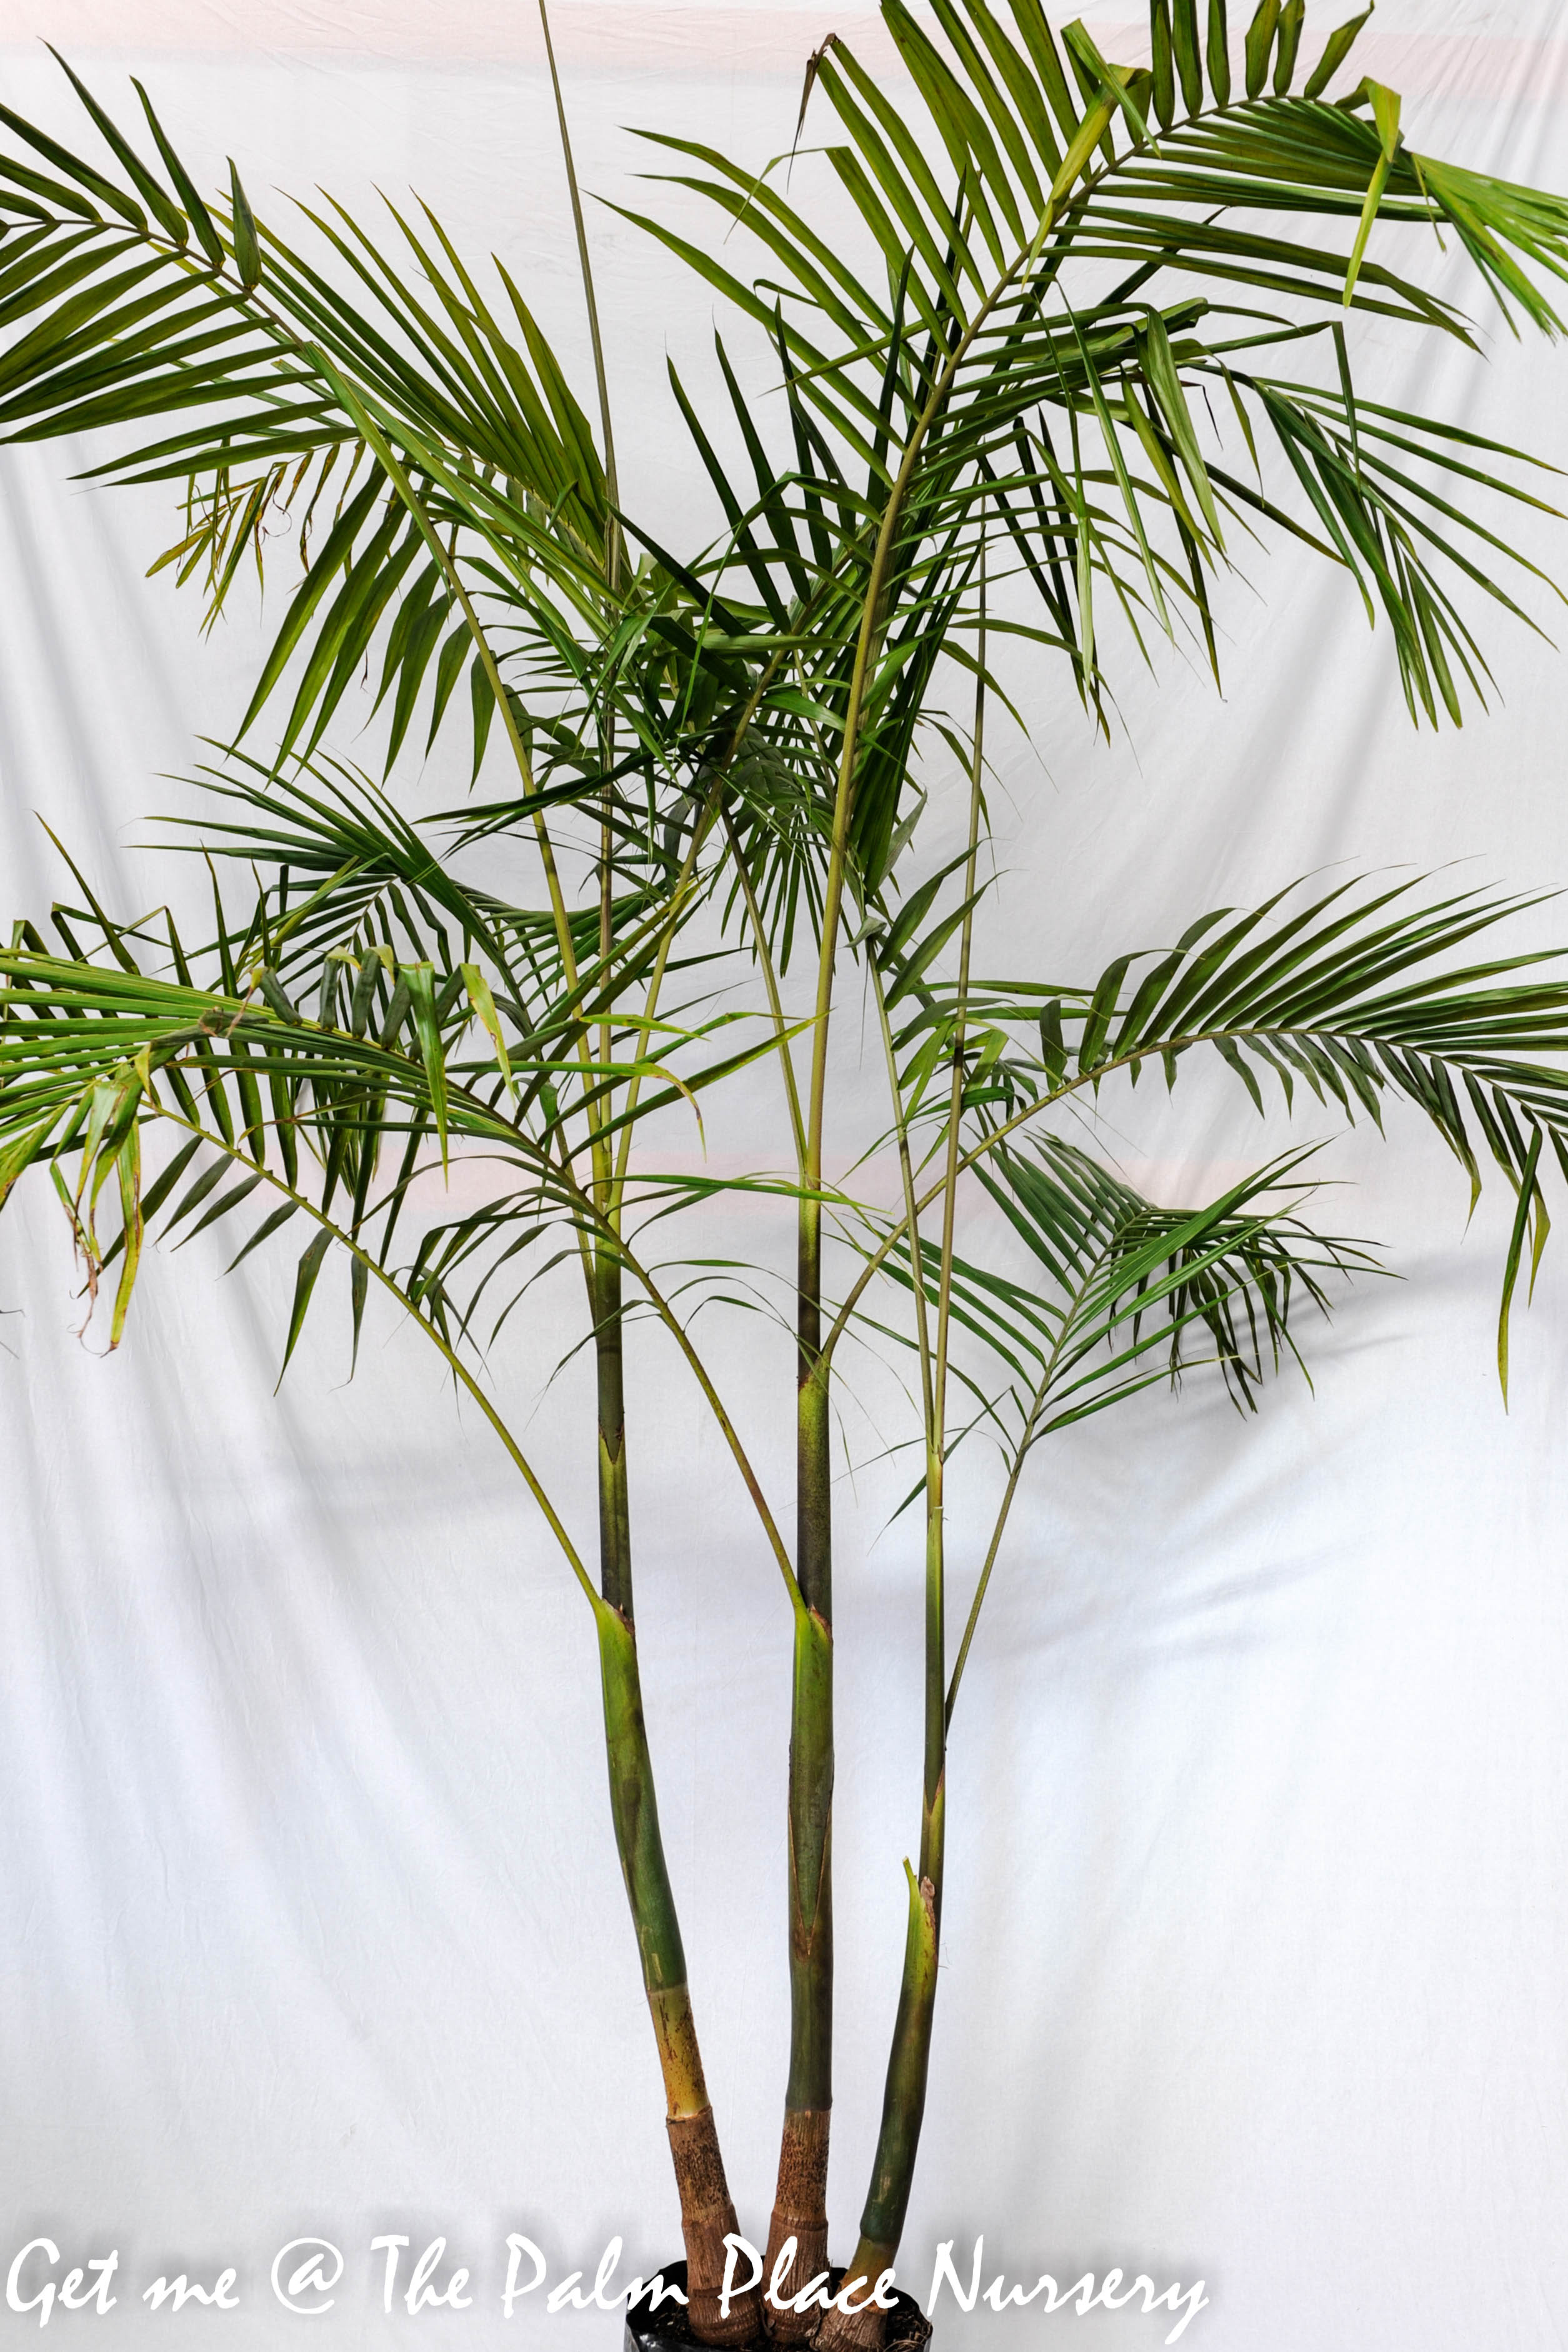 Bangalow Palms 40cm x 5 - Bulk Buy and Save